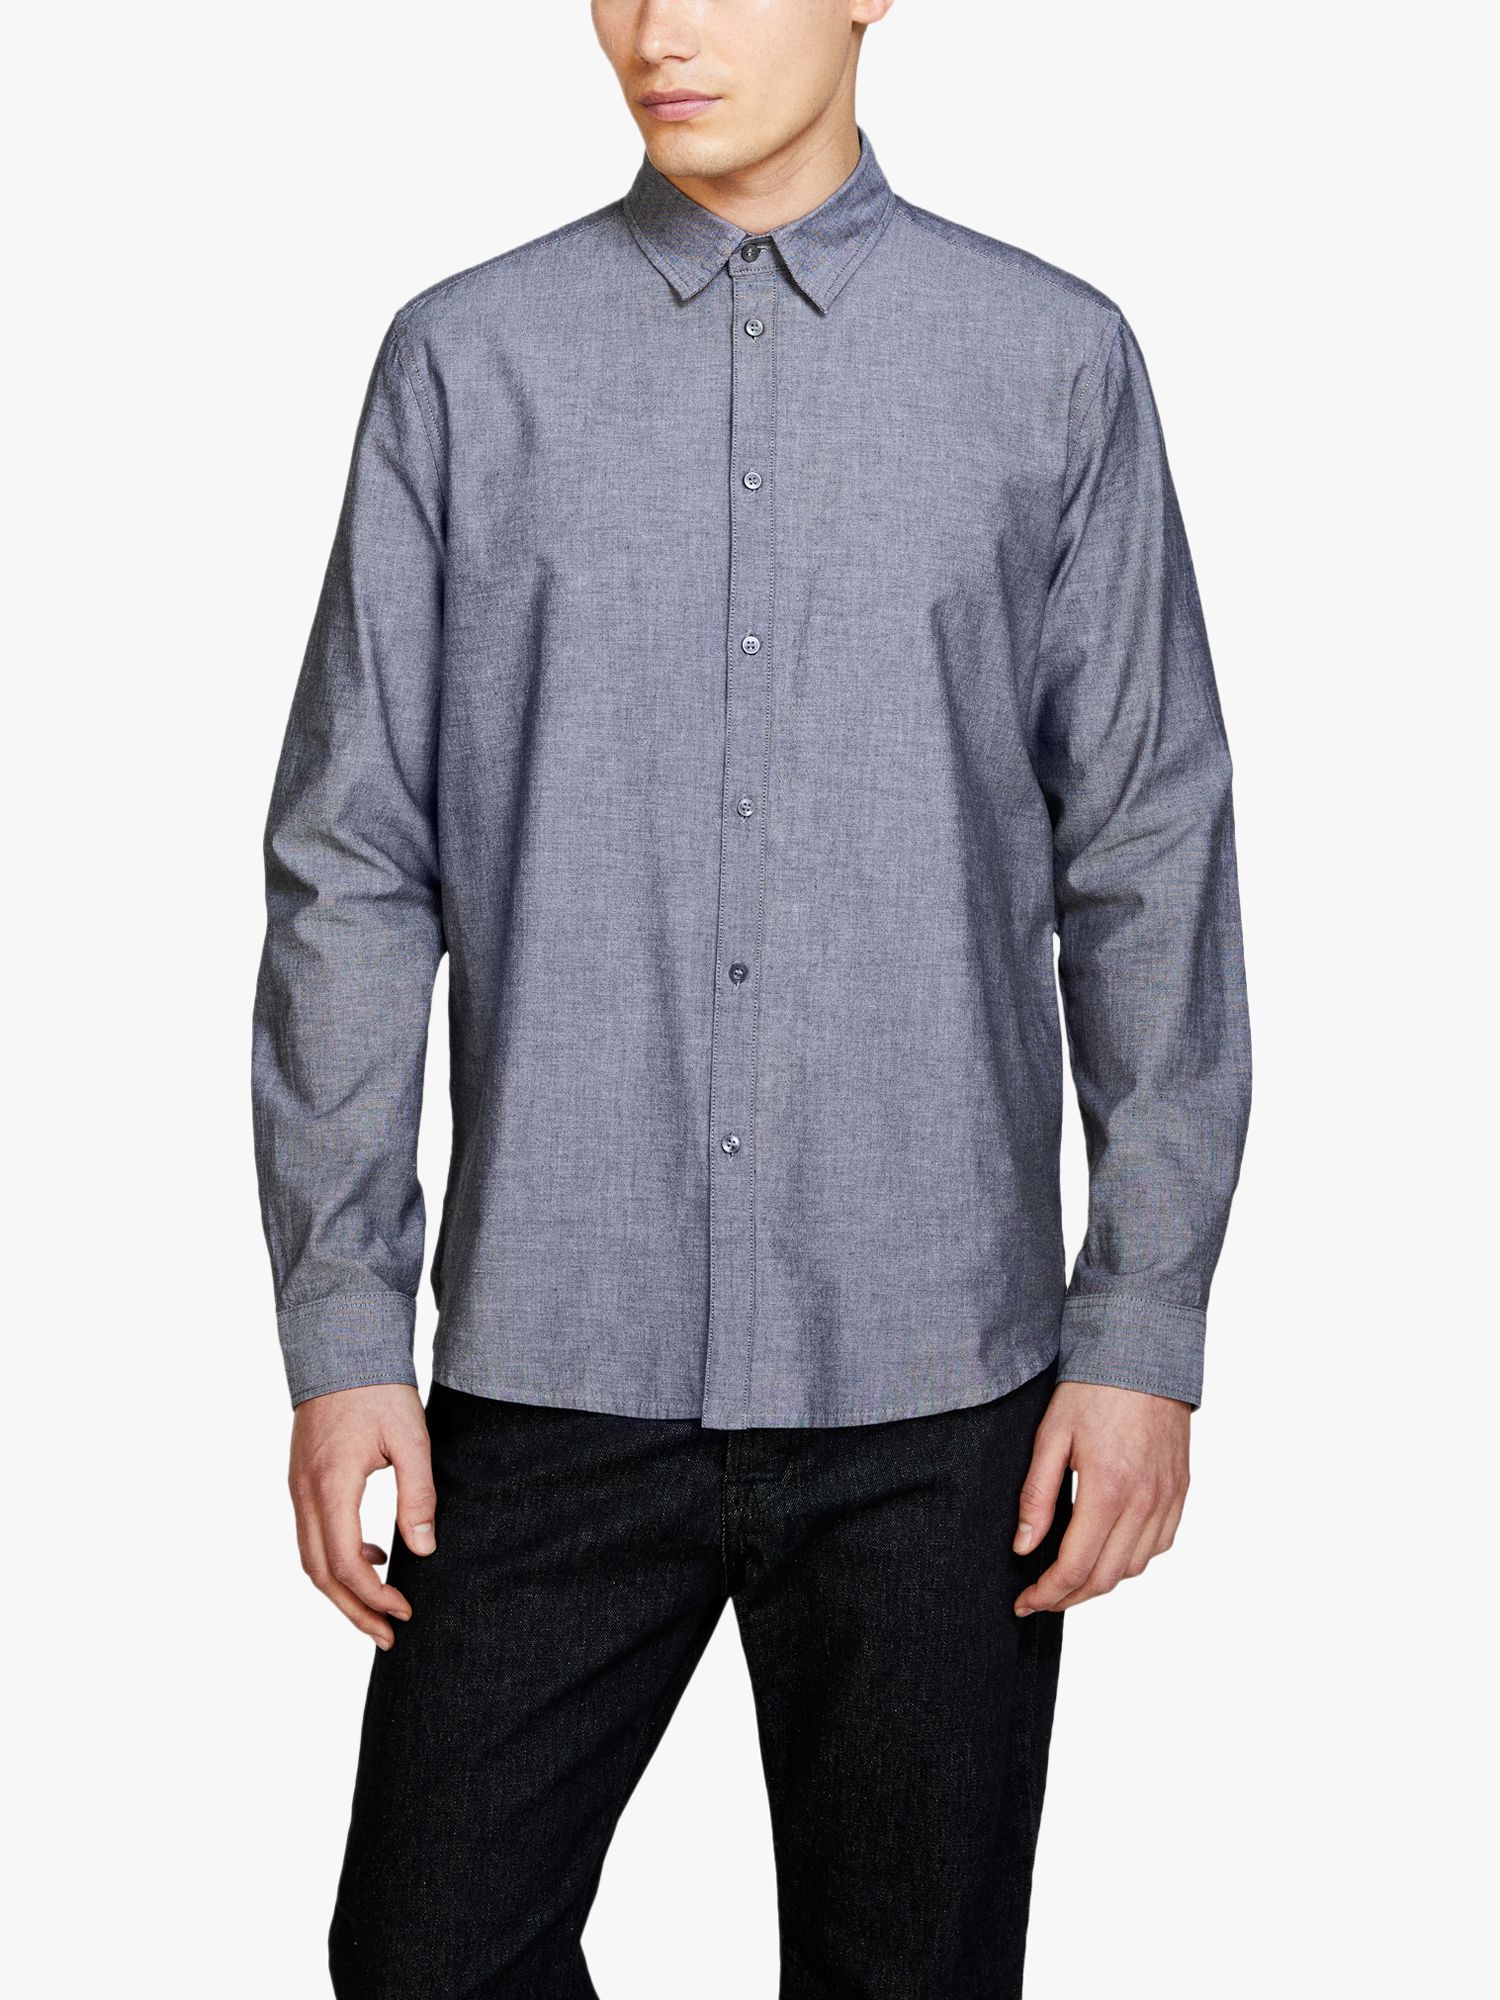 SISLEY Slim Fit Oxford Cotton Shirt, Grey, 15.5